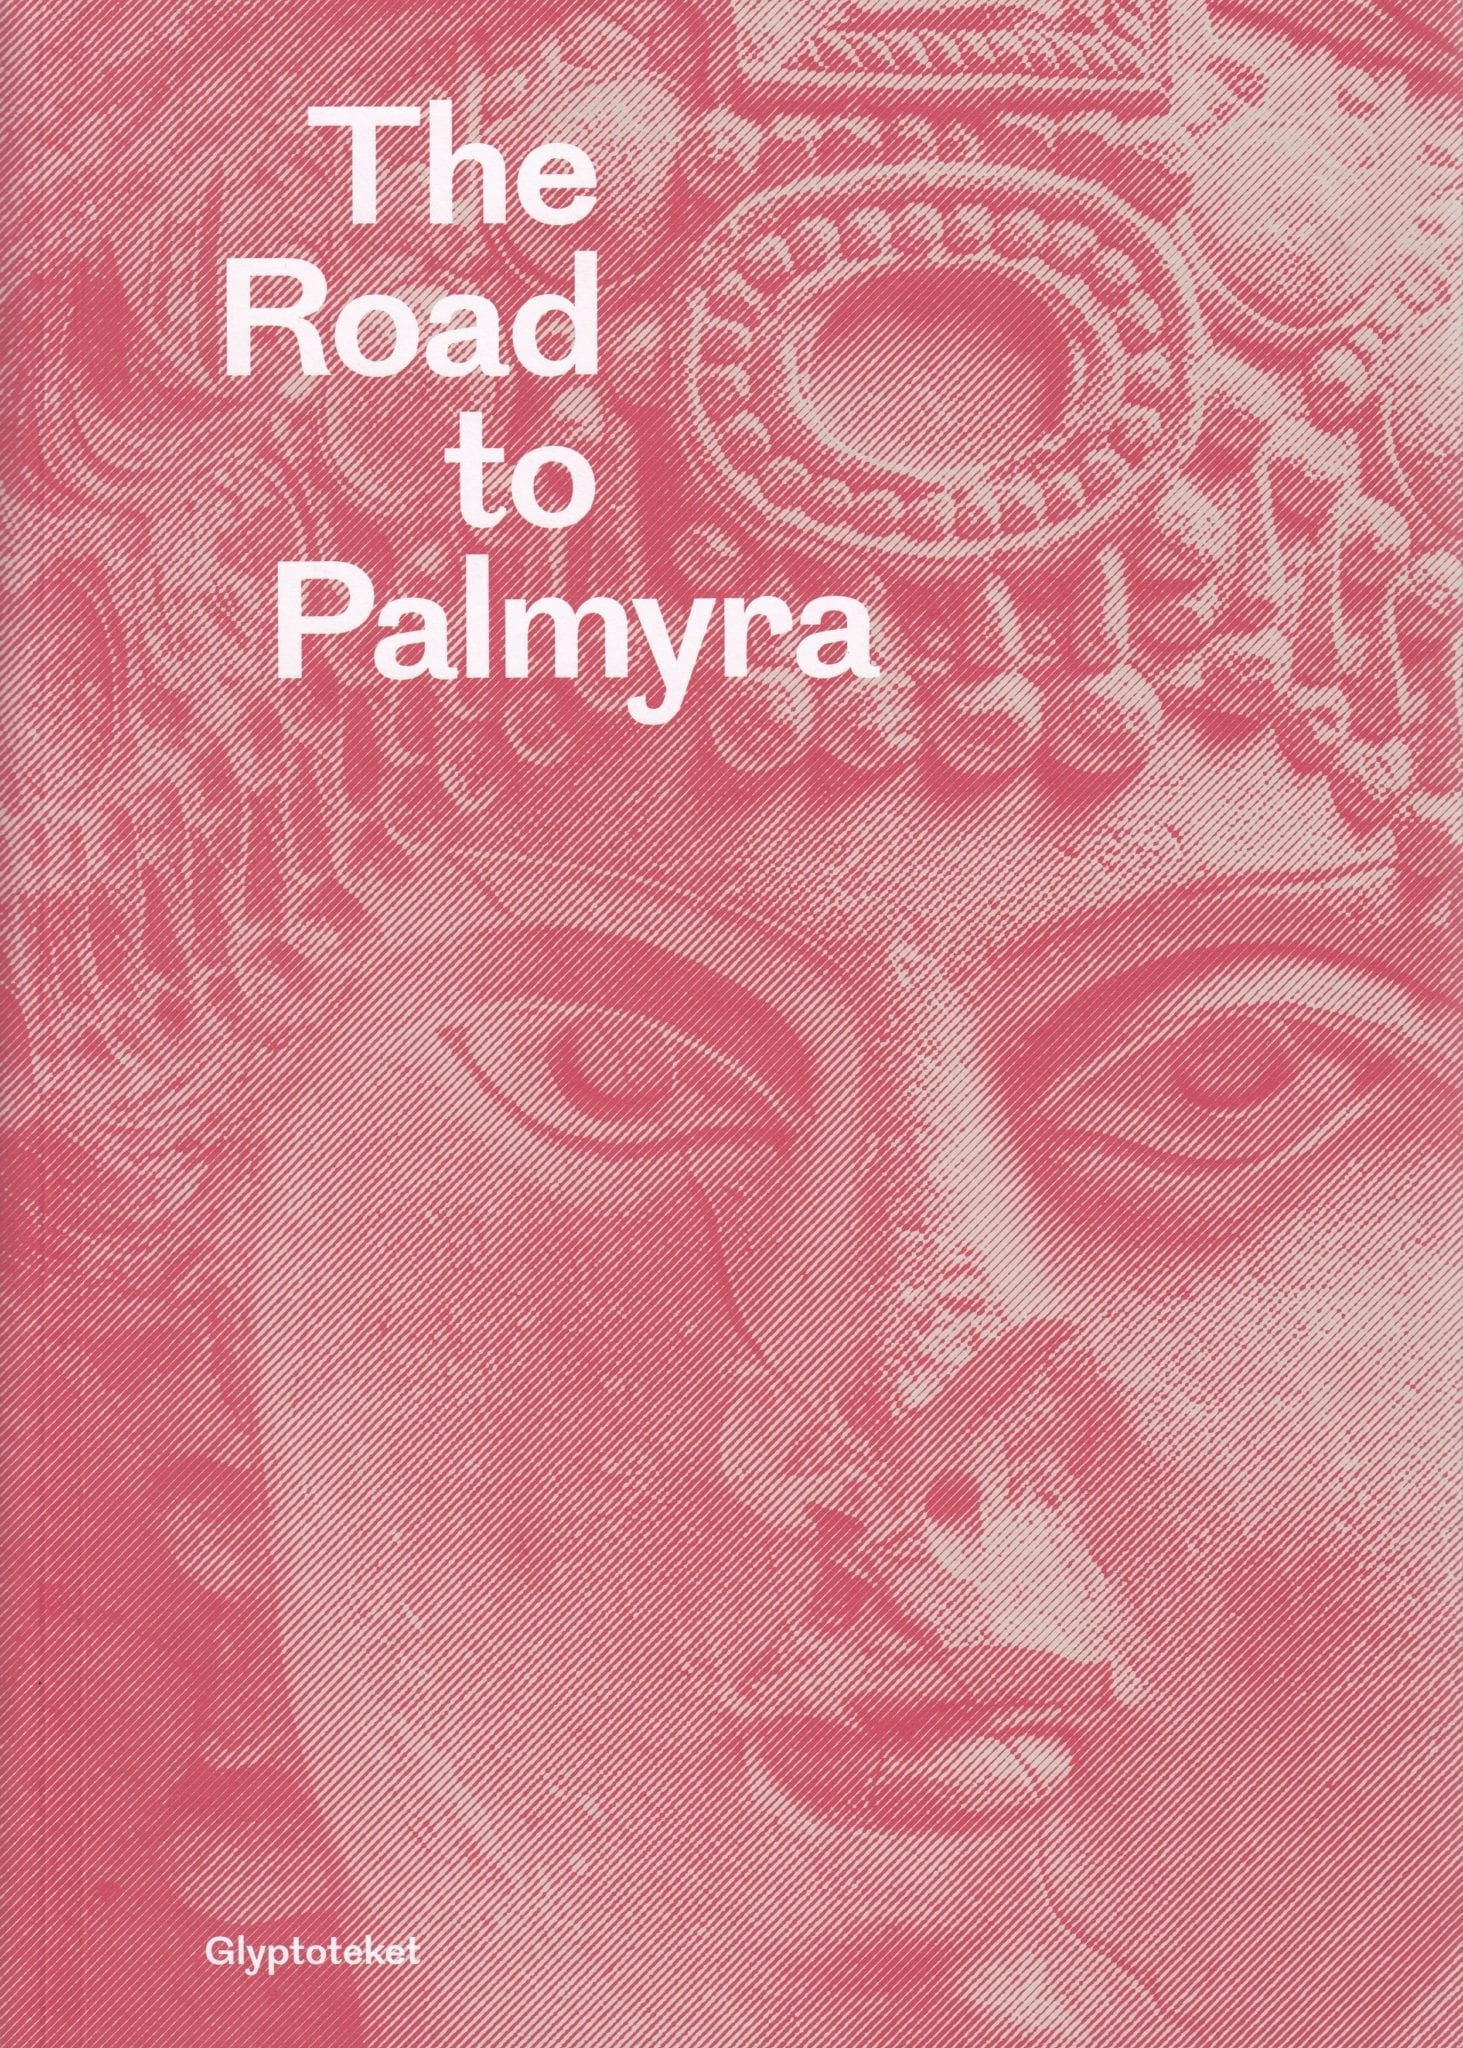 The Road to Palmyraimage